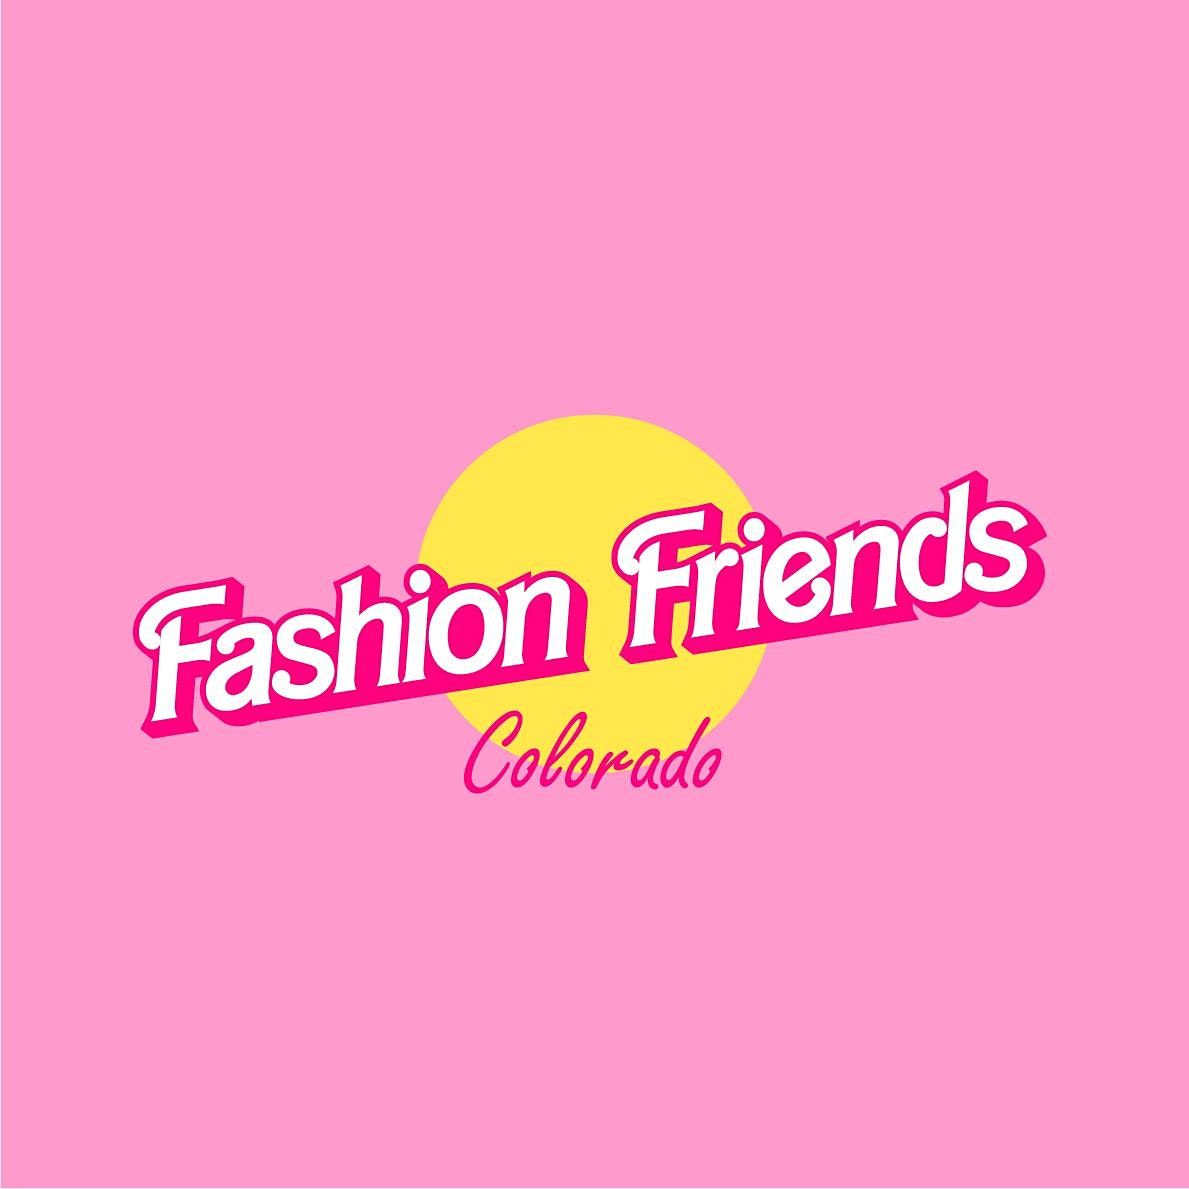 Fashion Friends Colorado: Designer Market and Fashion Party